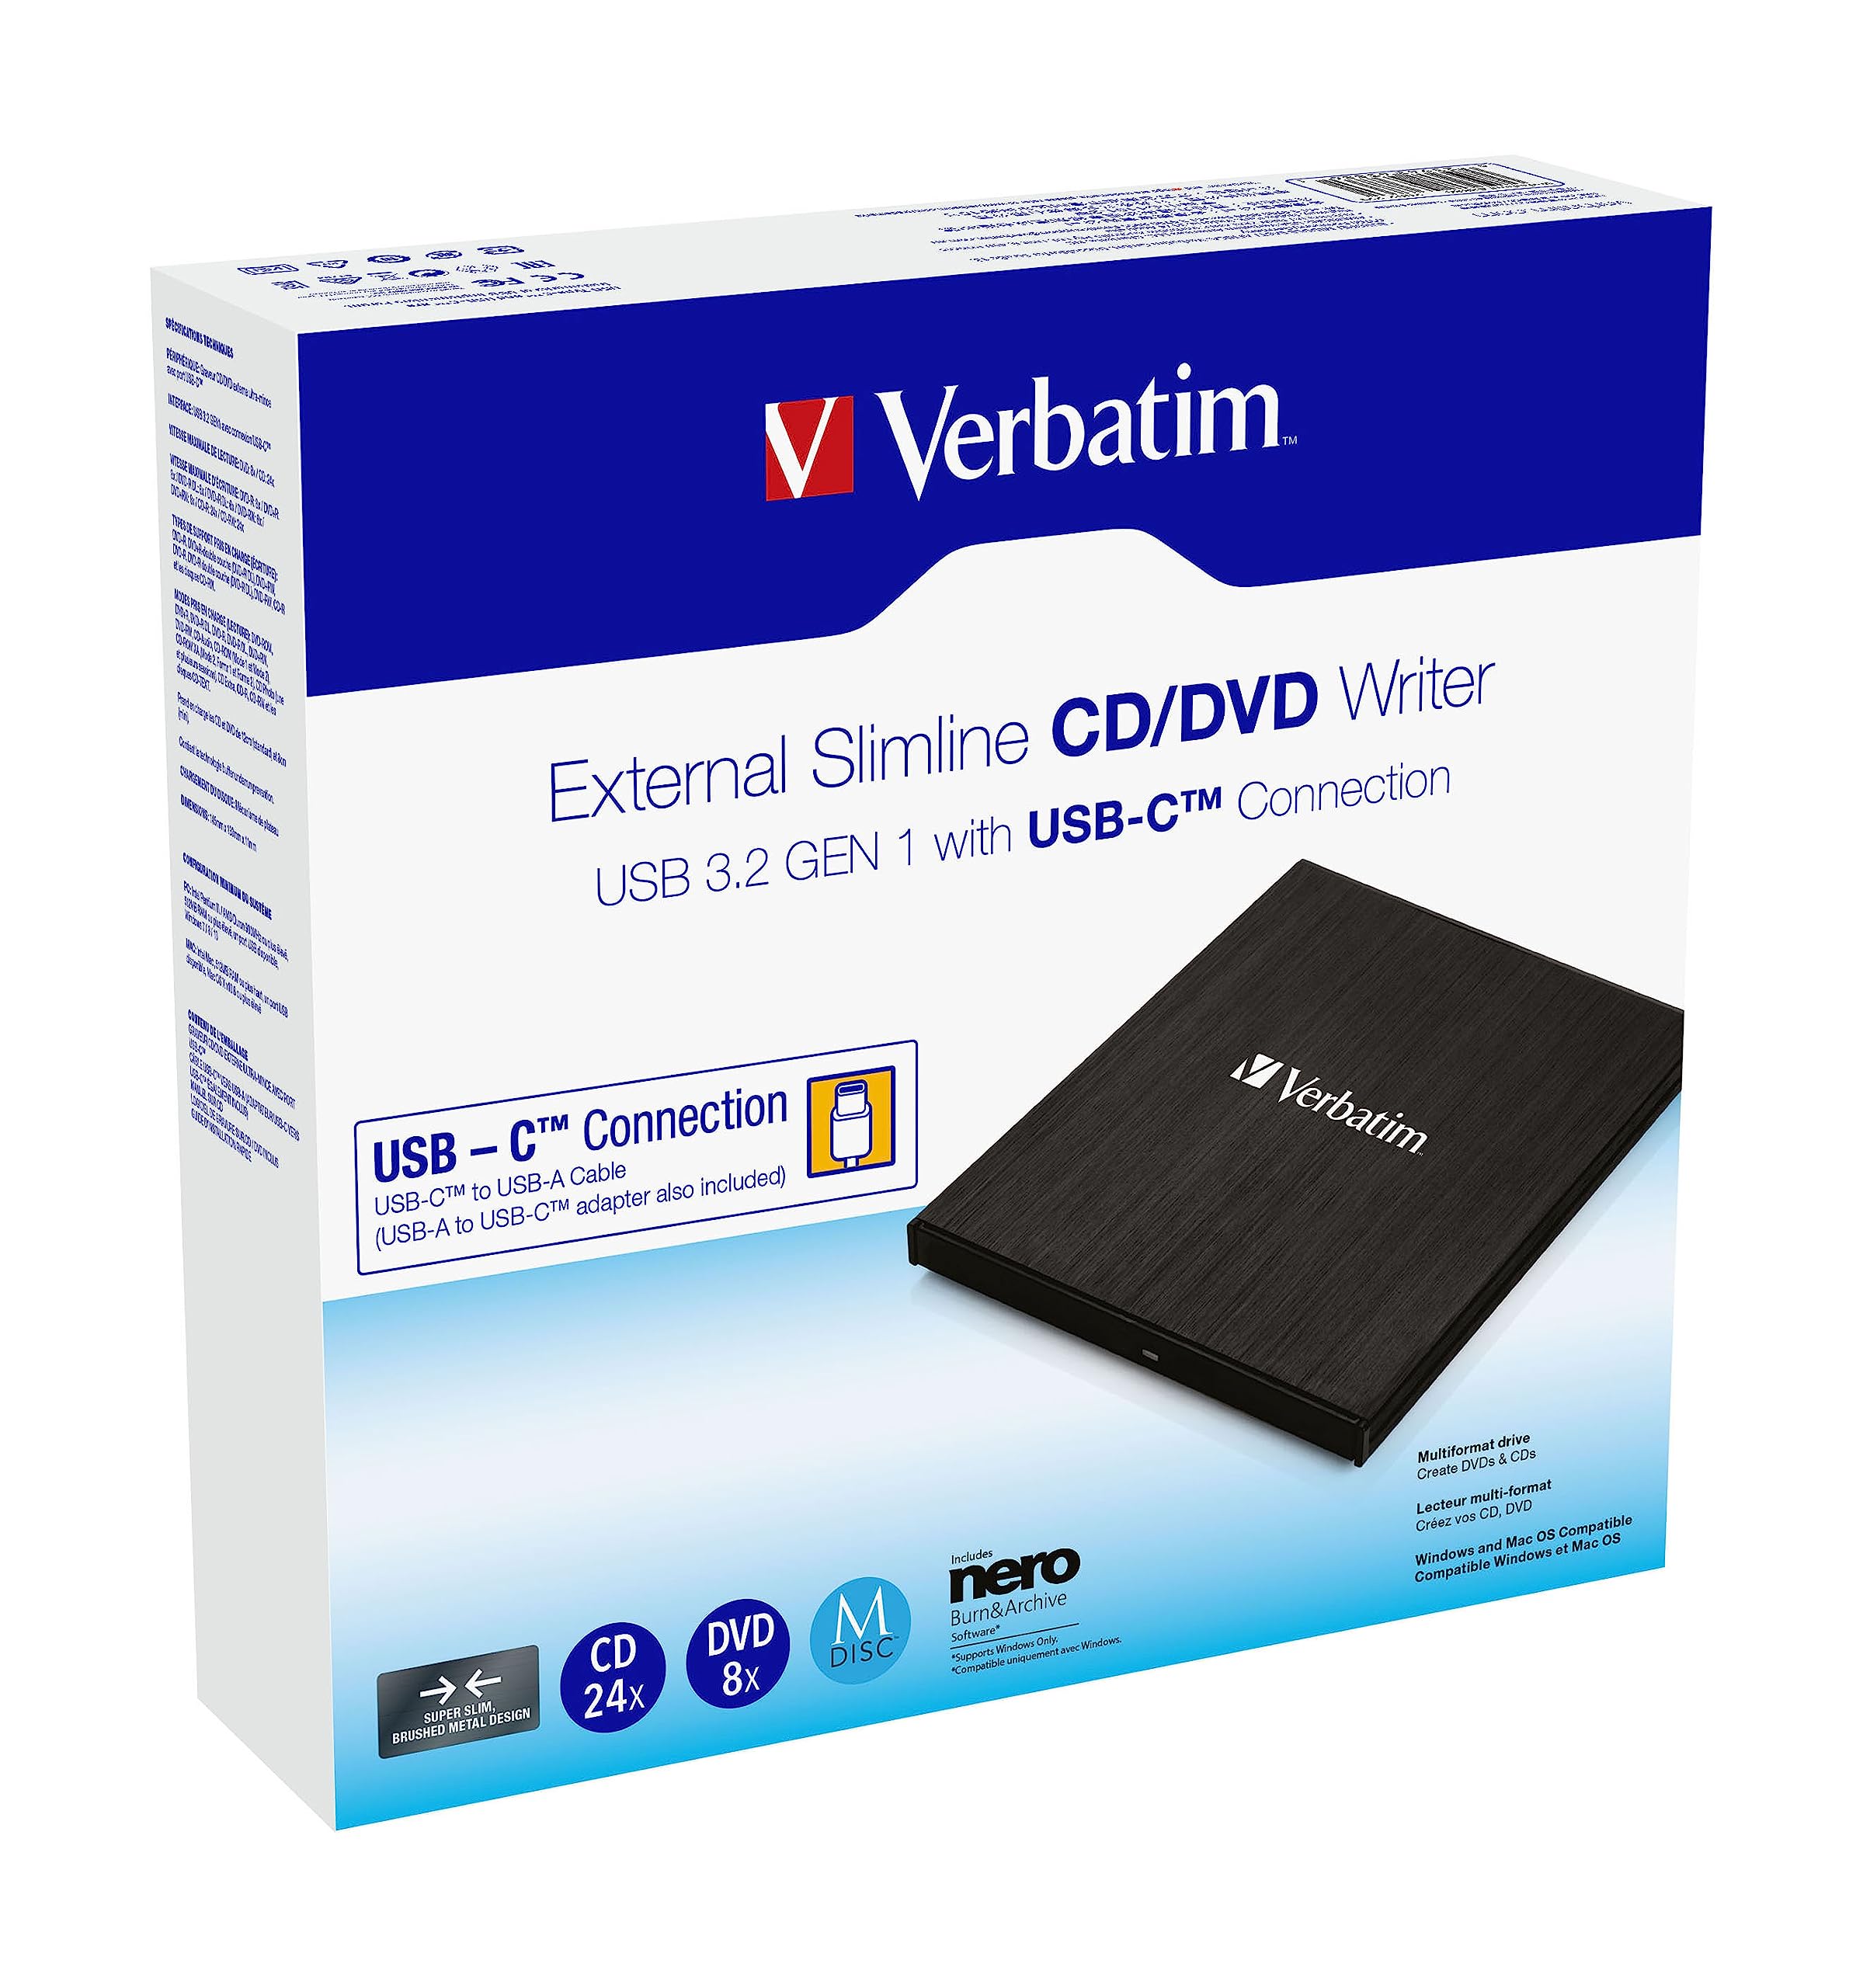 Verbatim External Slimline CD/DVD Writer - USB 3.2 Gen1 with USB-C Connection incl. USB-C to USB-A Cable - Compact Design - External DVD Writer - External CD-Drive - Slim Design